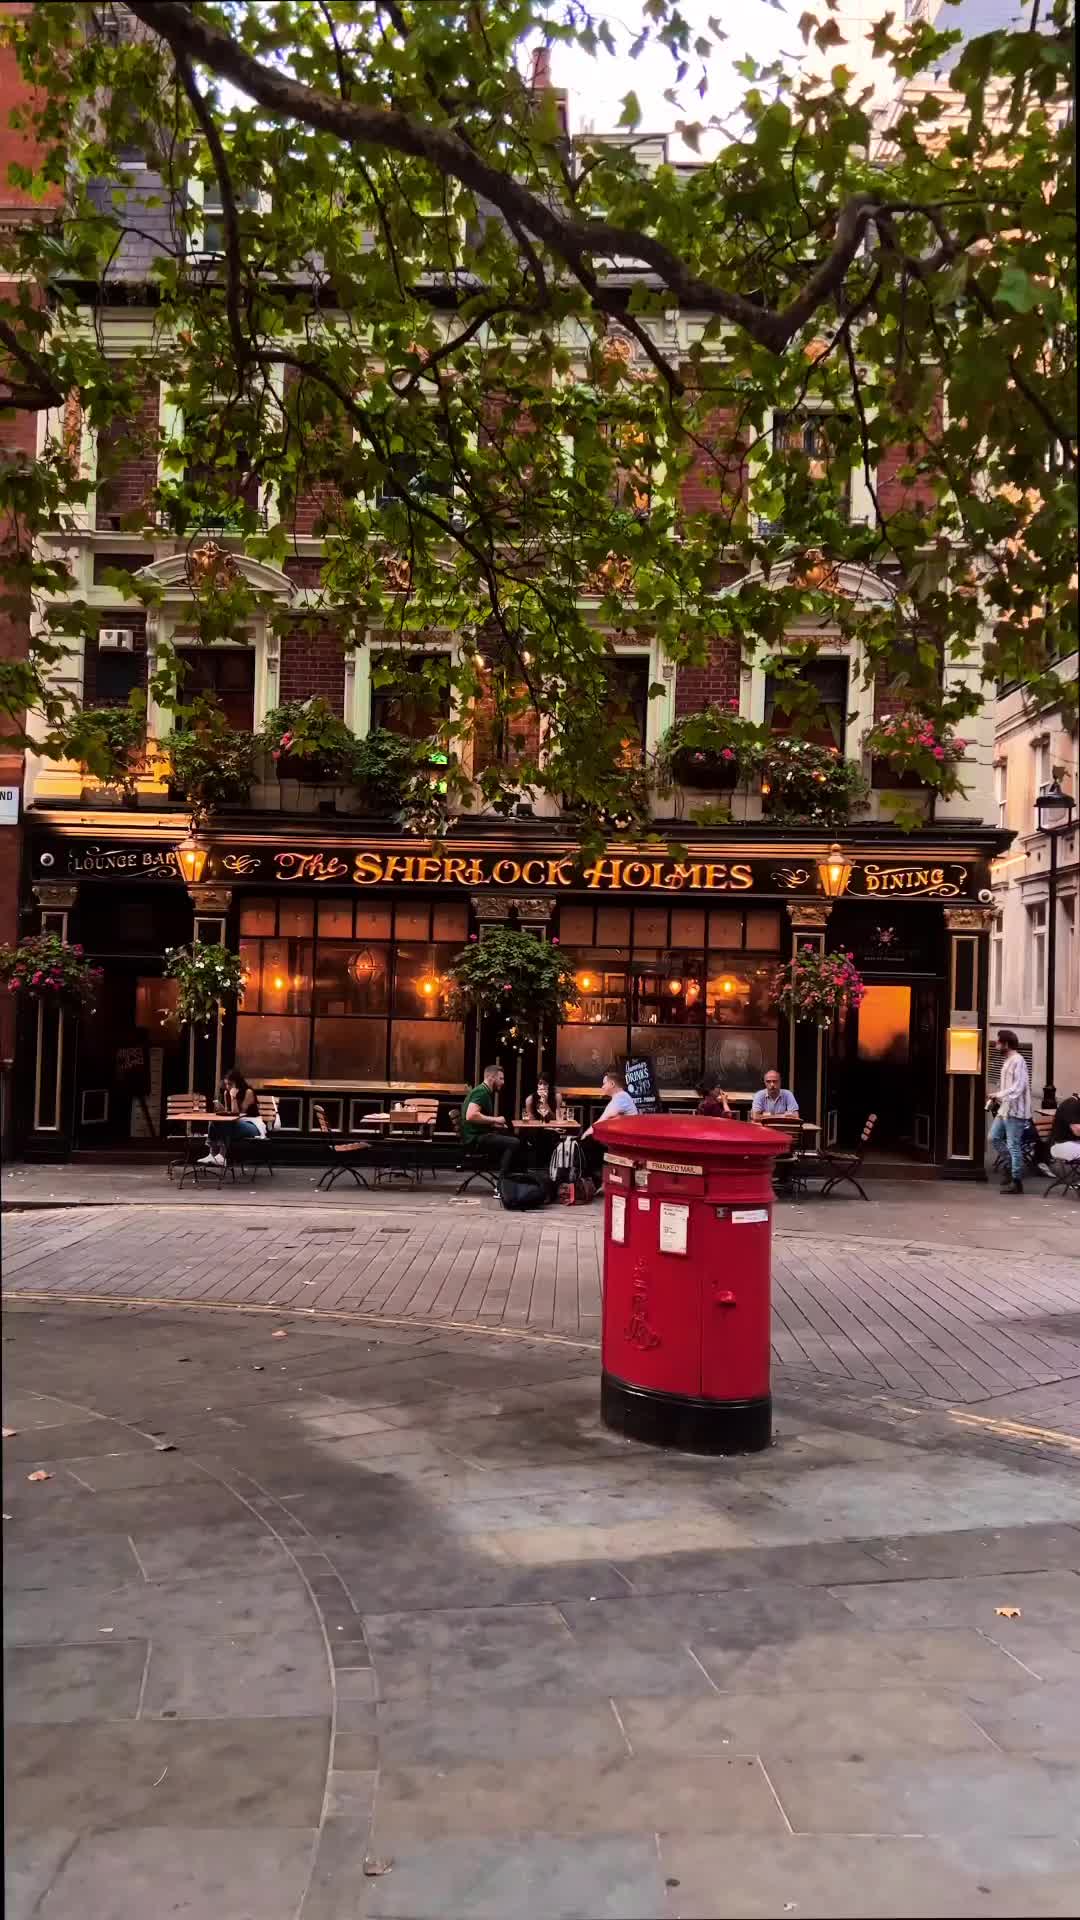 Visit The Sherlock Holmes Pub in London